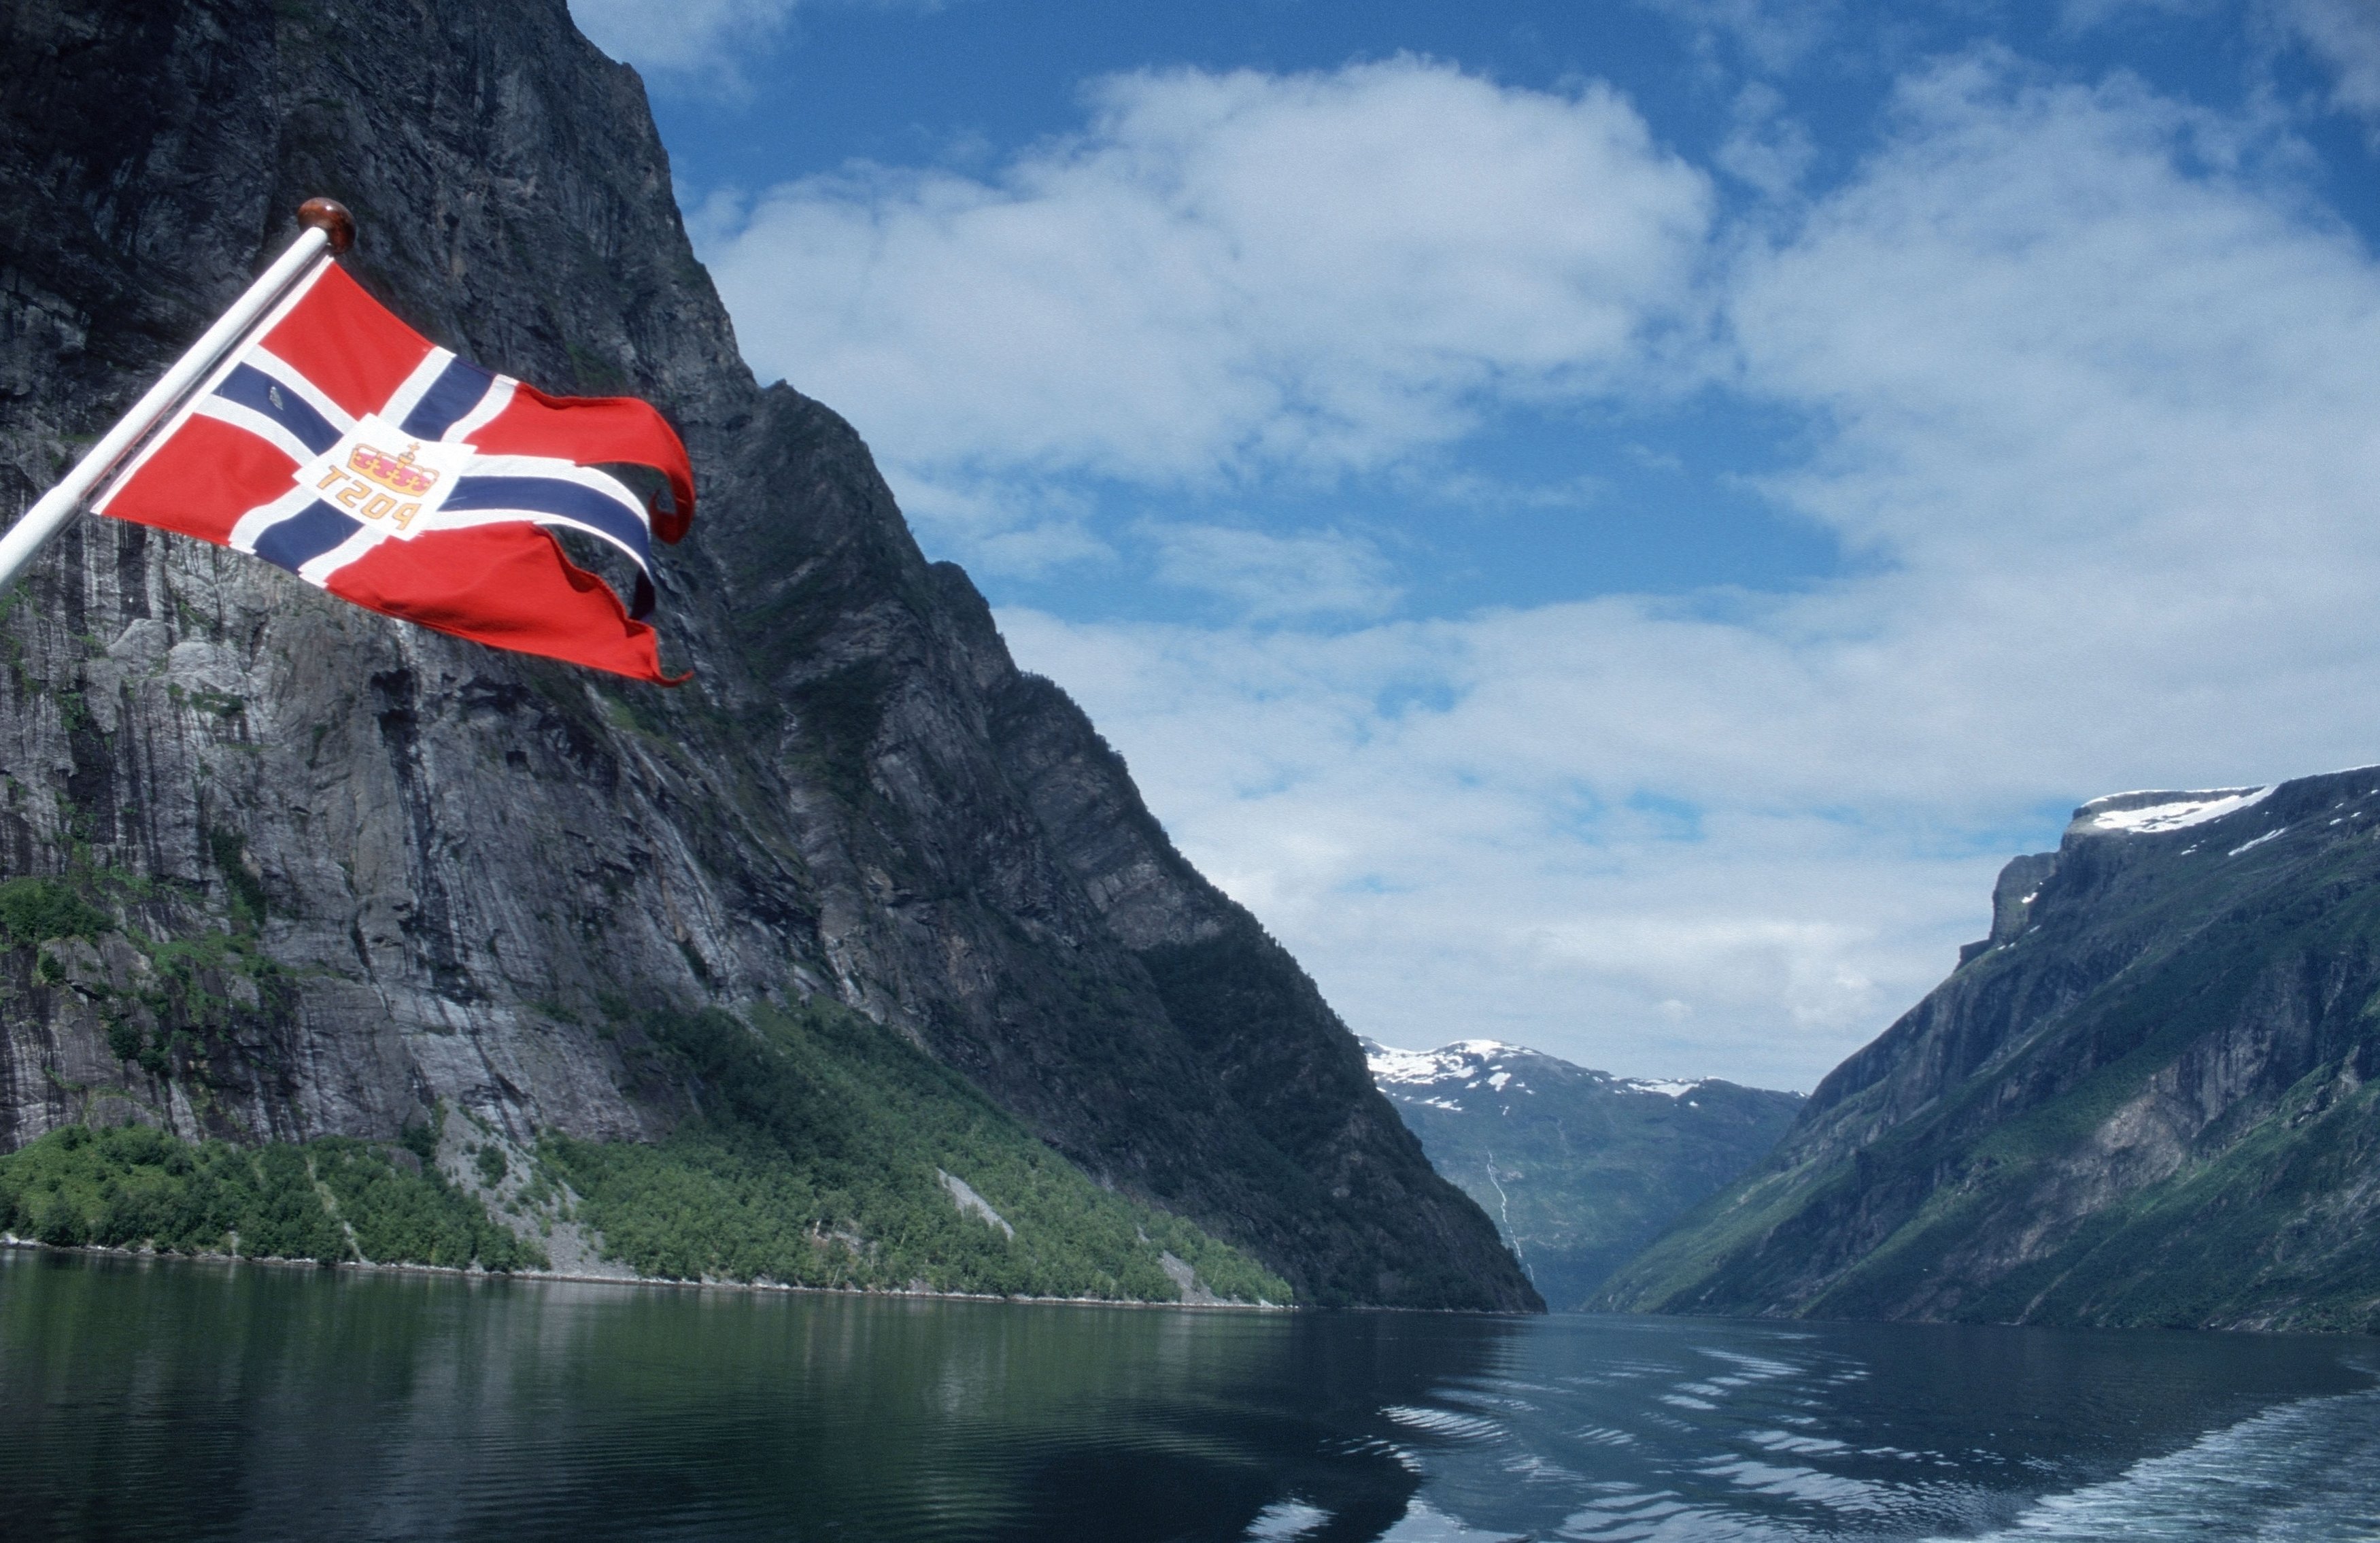 Включи норвегию. Норвегия Врадал. Хеннингсвер, Норвегия. Ковид в Норвегии. Флаг Норвегии и горы.